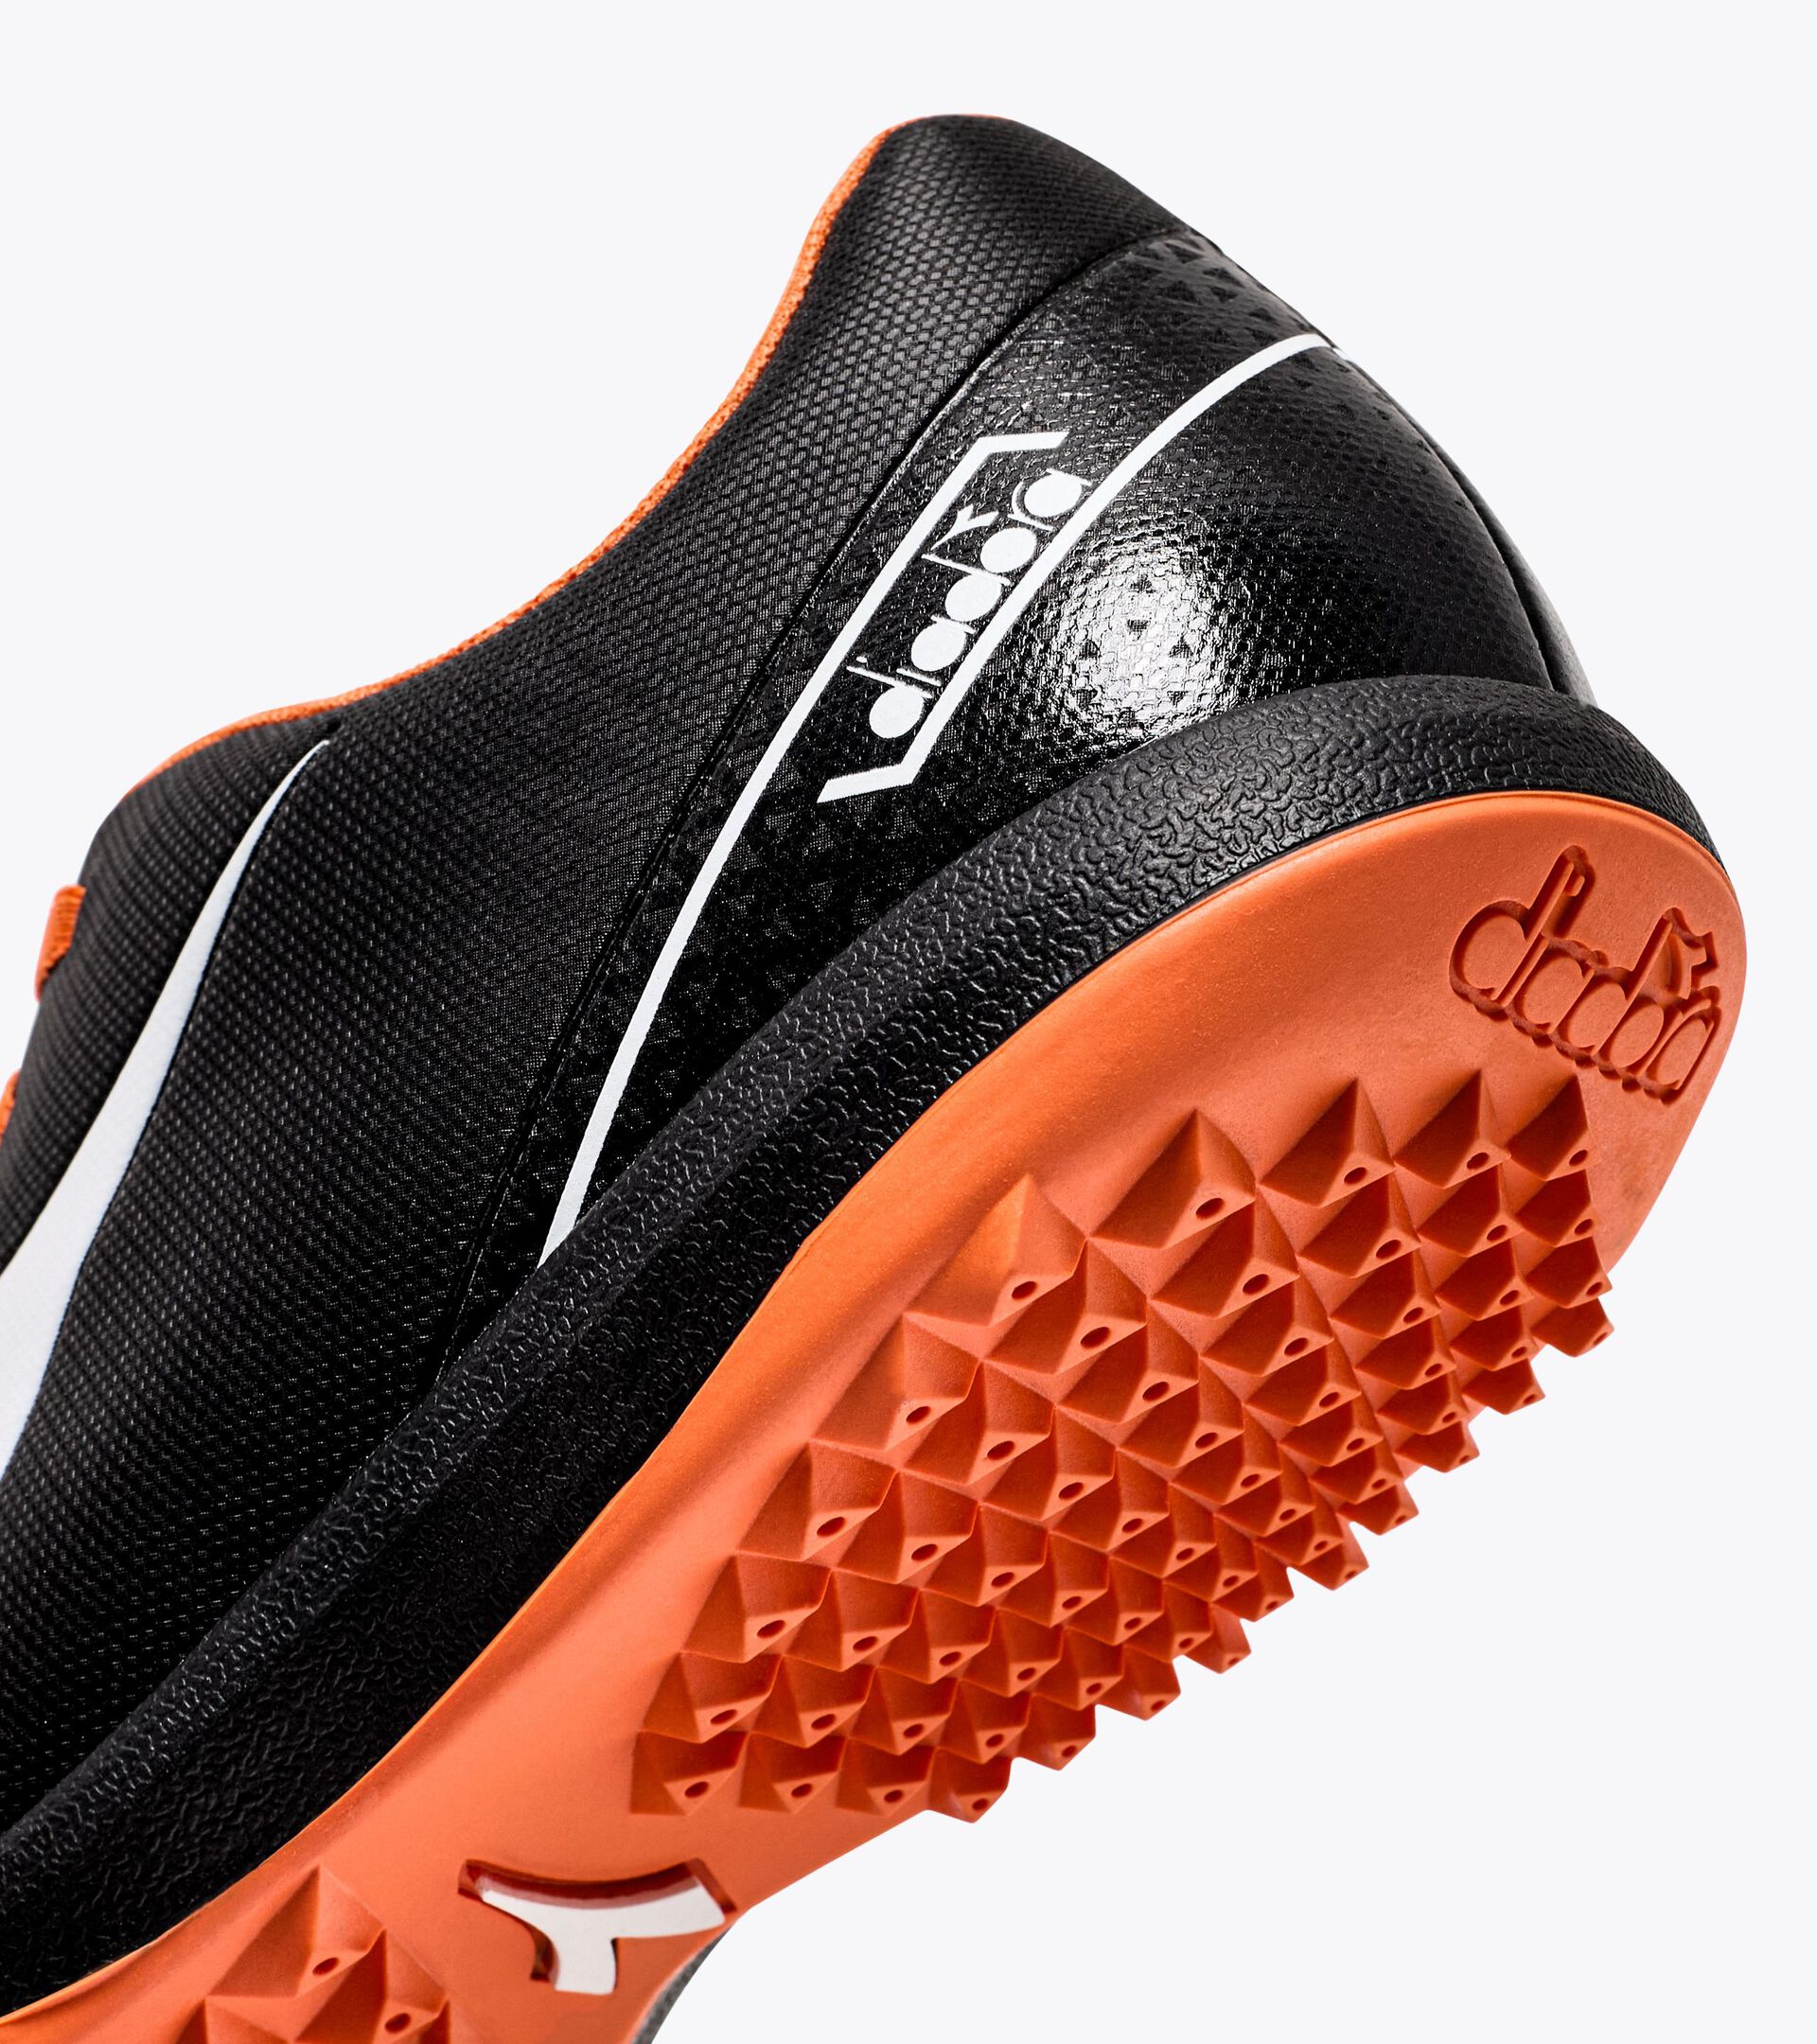 Calcio boots for synthetic turfs or firm grounds - Men PICHICHI 6 TFR BLACK/WHITE/ORANGE - Diadora